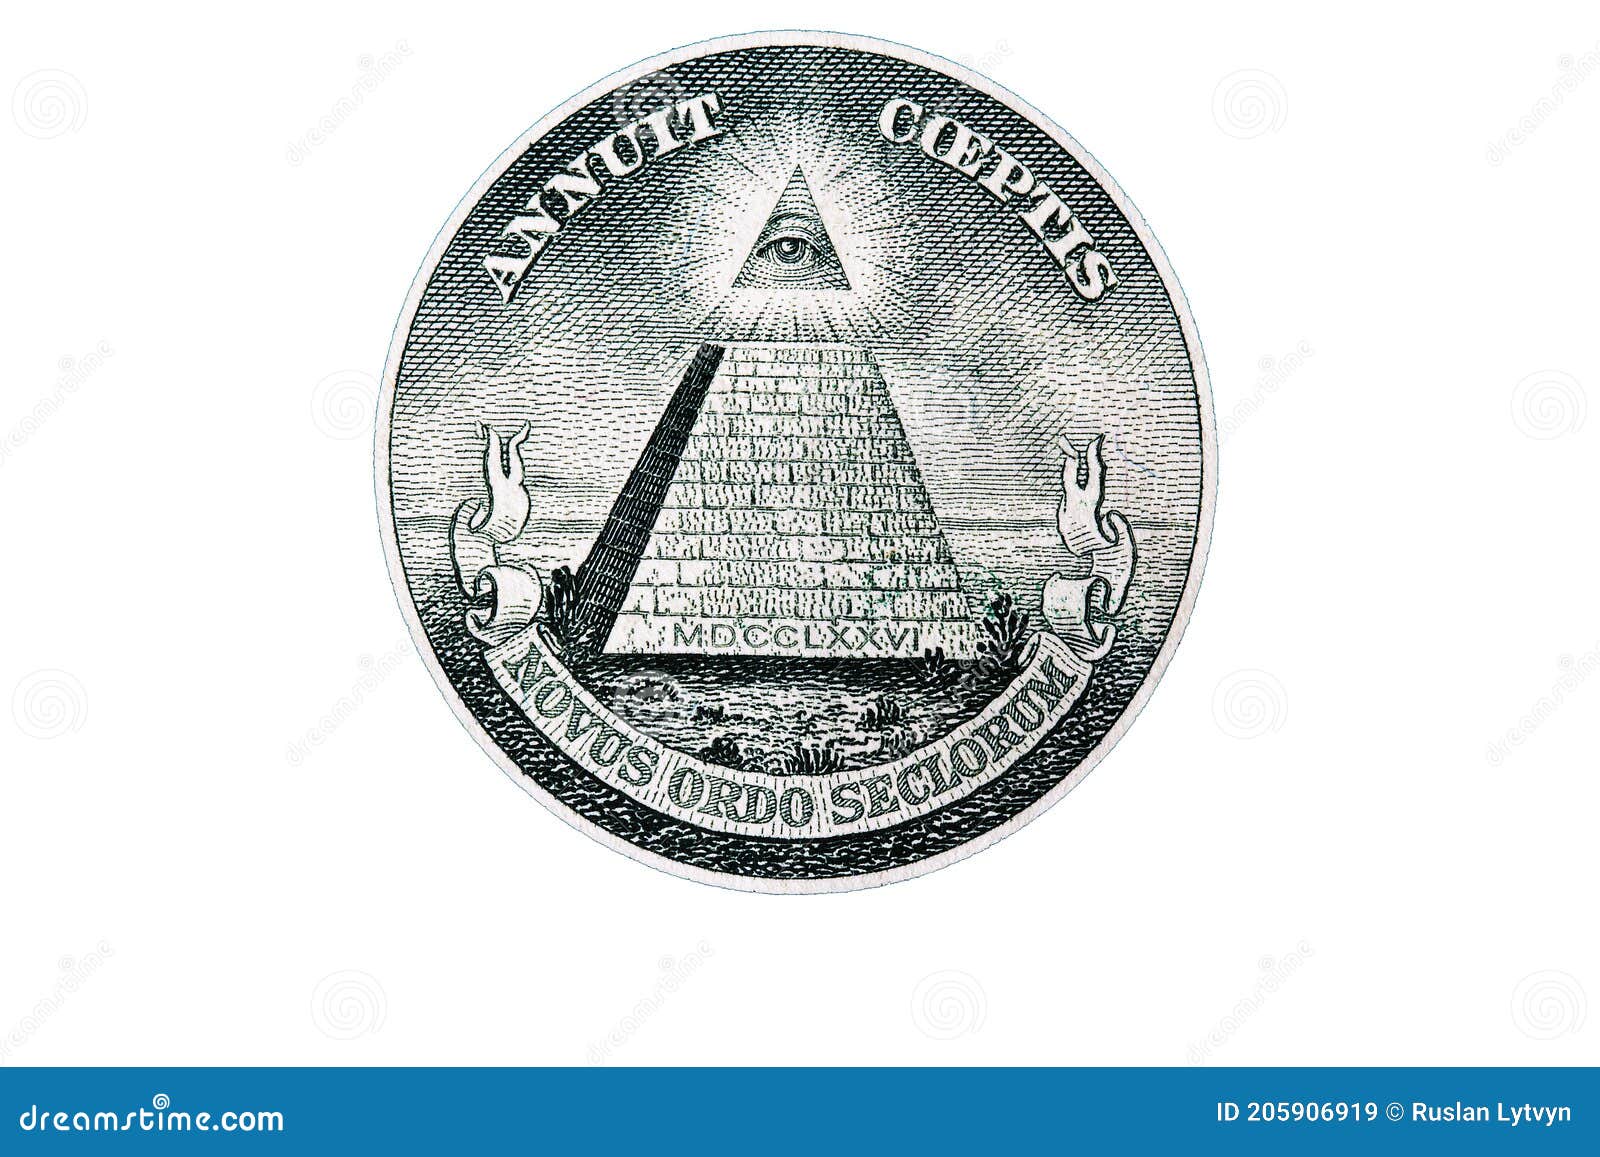 Pyramid On One Dollar Bill Stock Photography 6407528